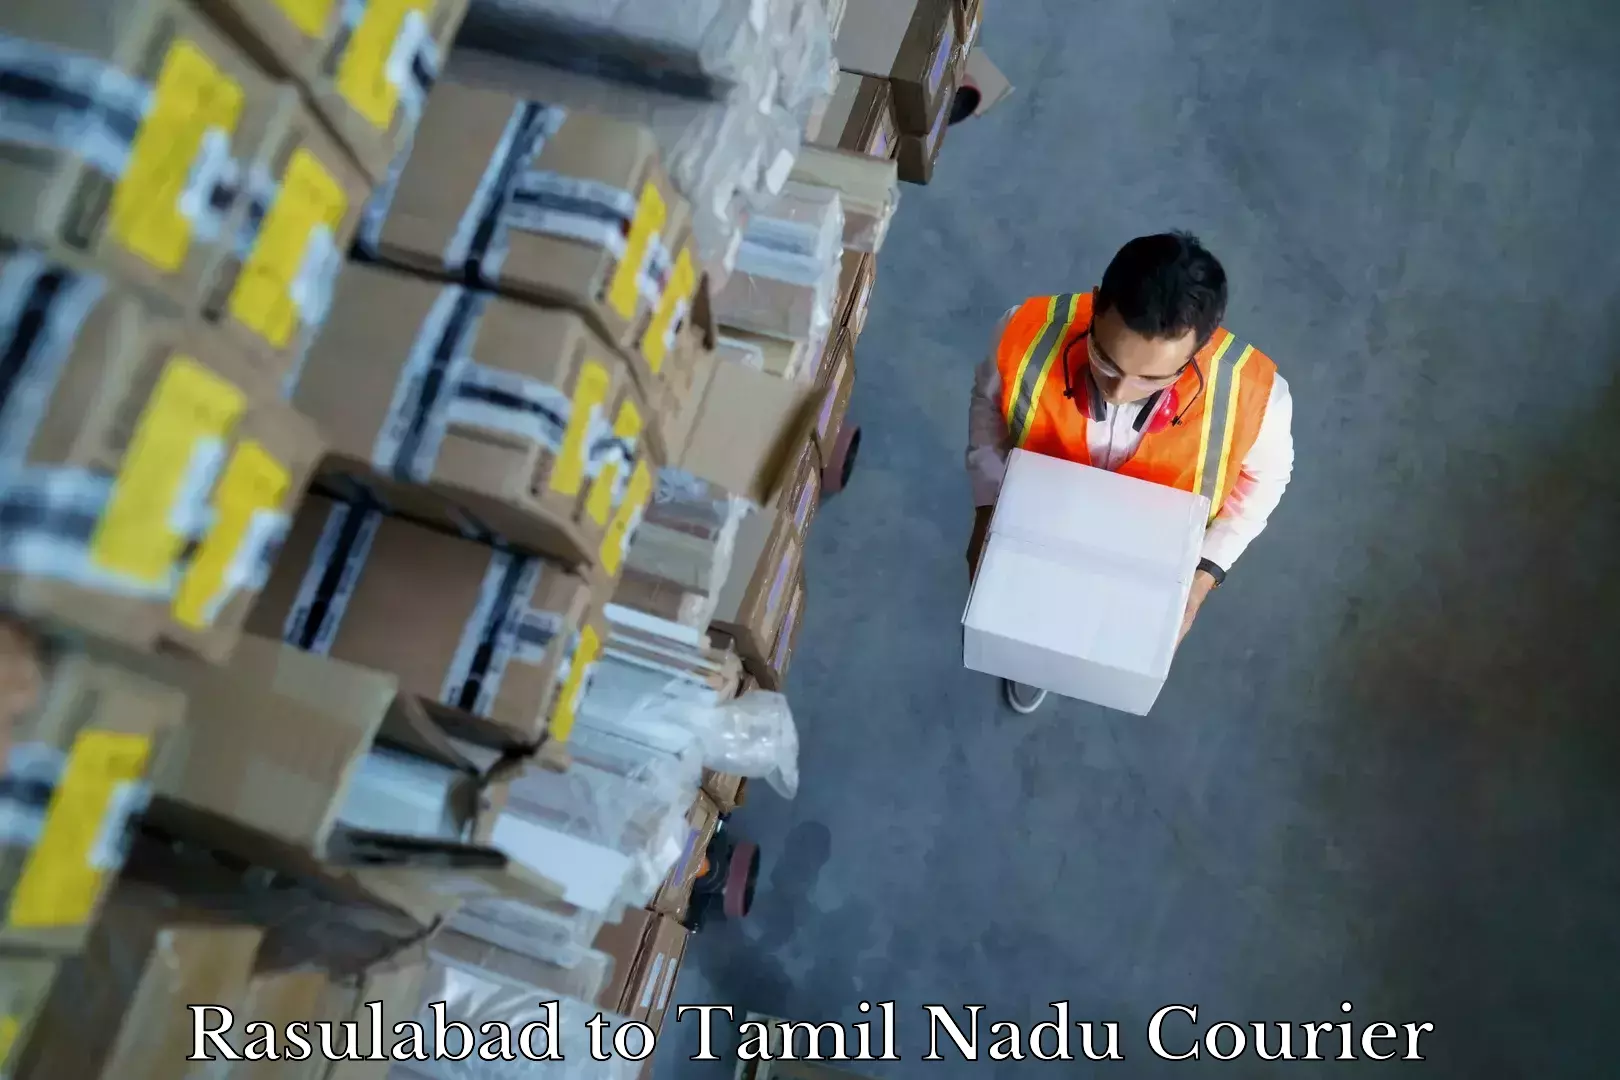 Furniture delivery service Rasulabad to Tamil Nadu